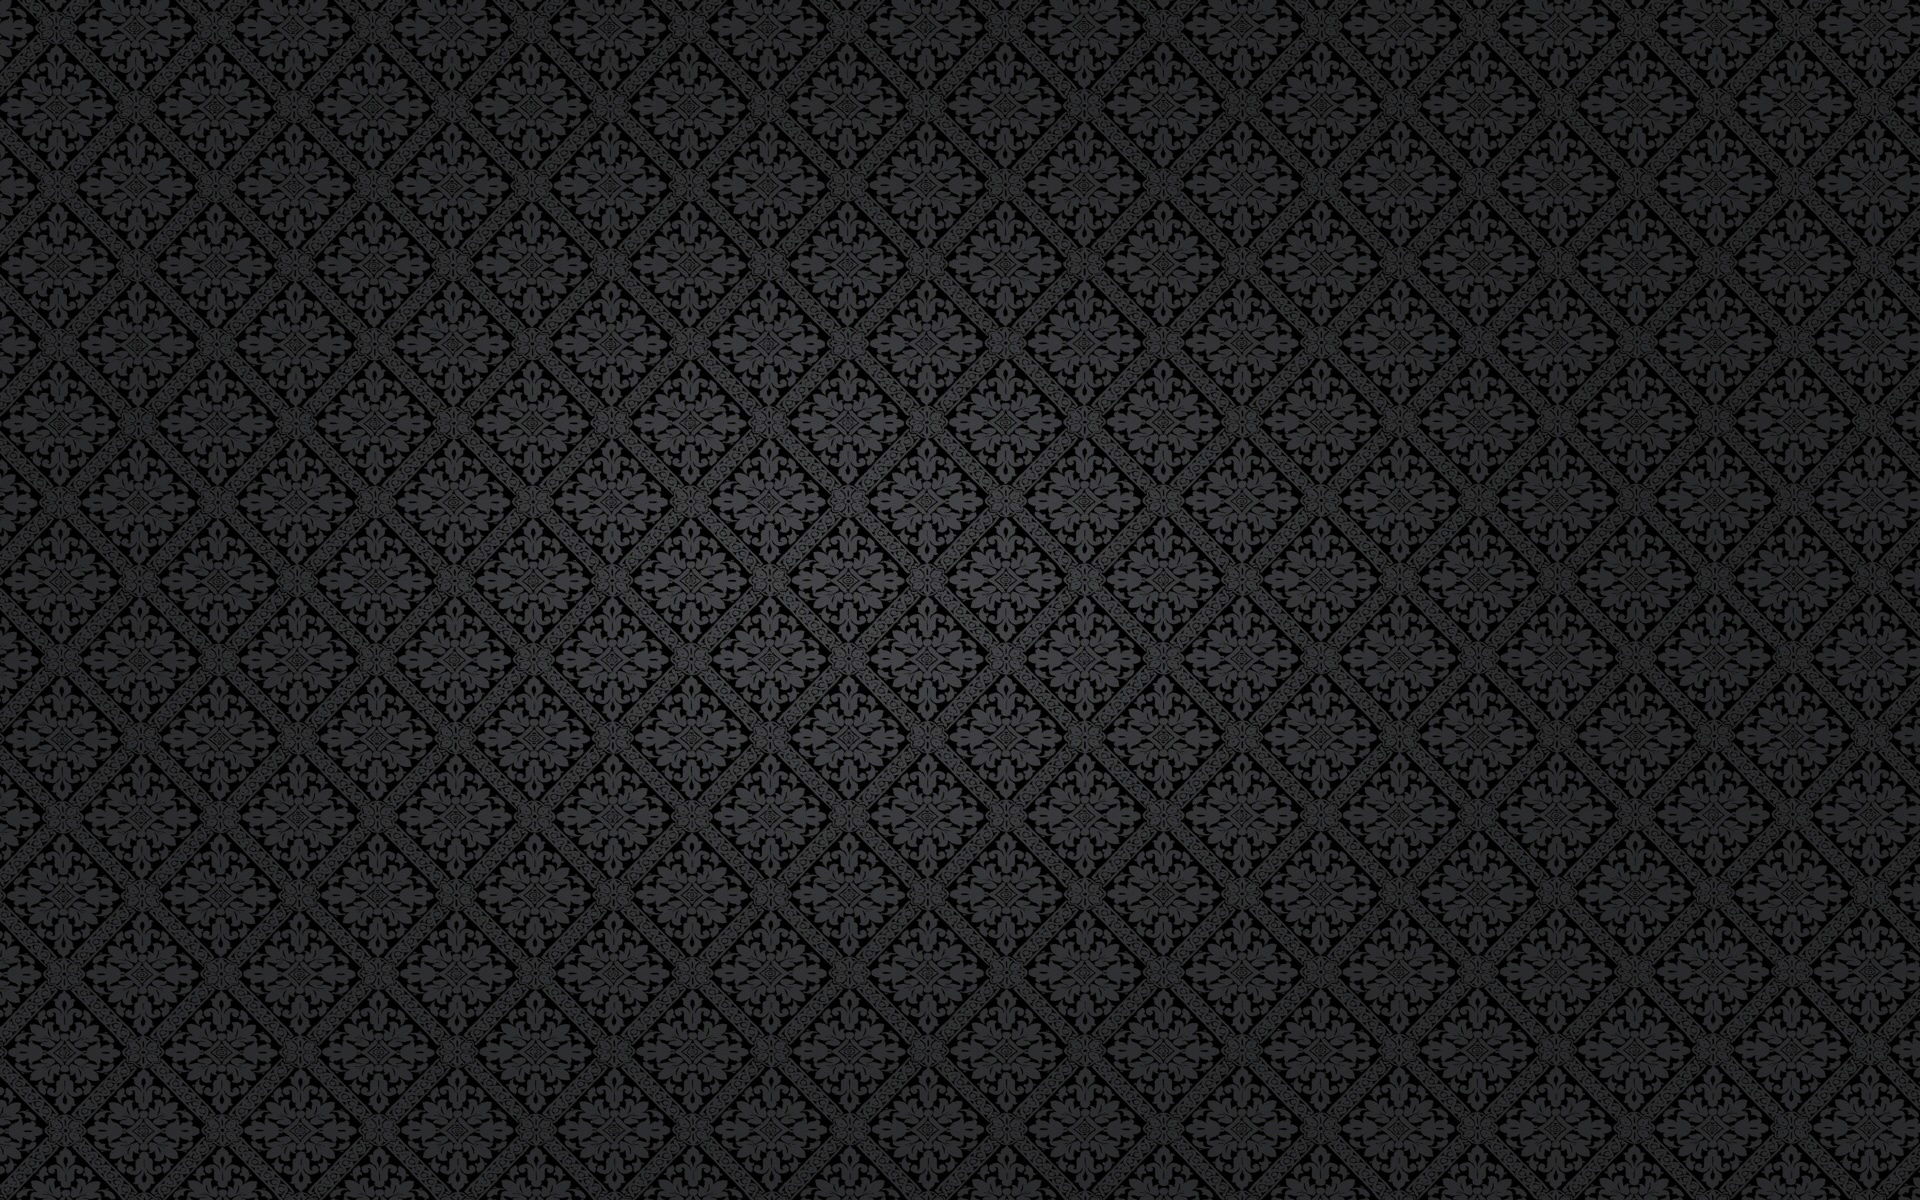 Black_Pattern_1_1920.jpg